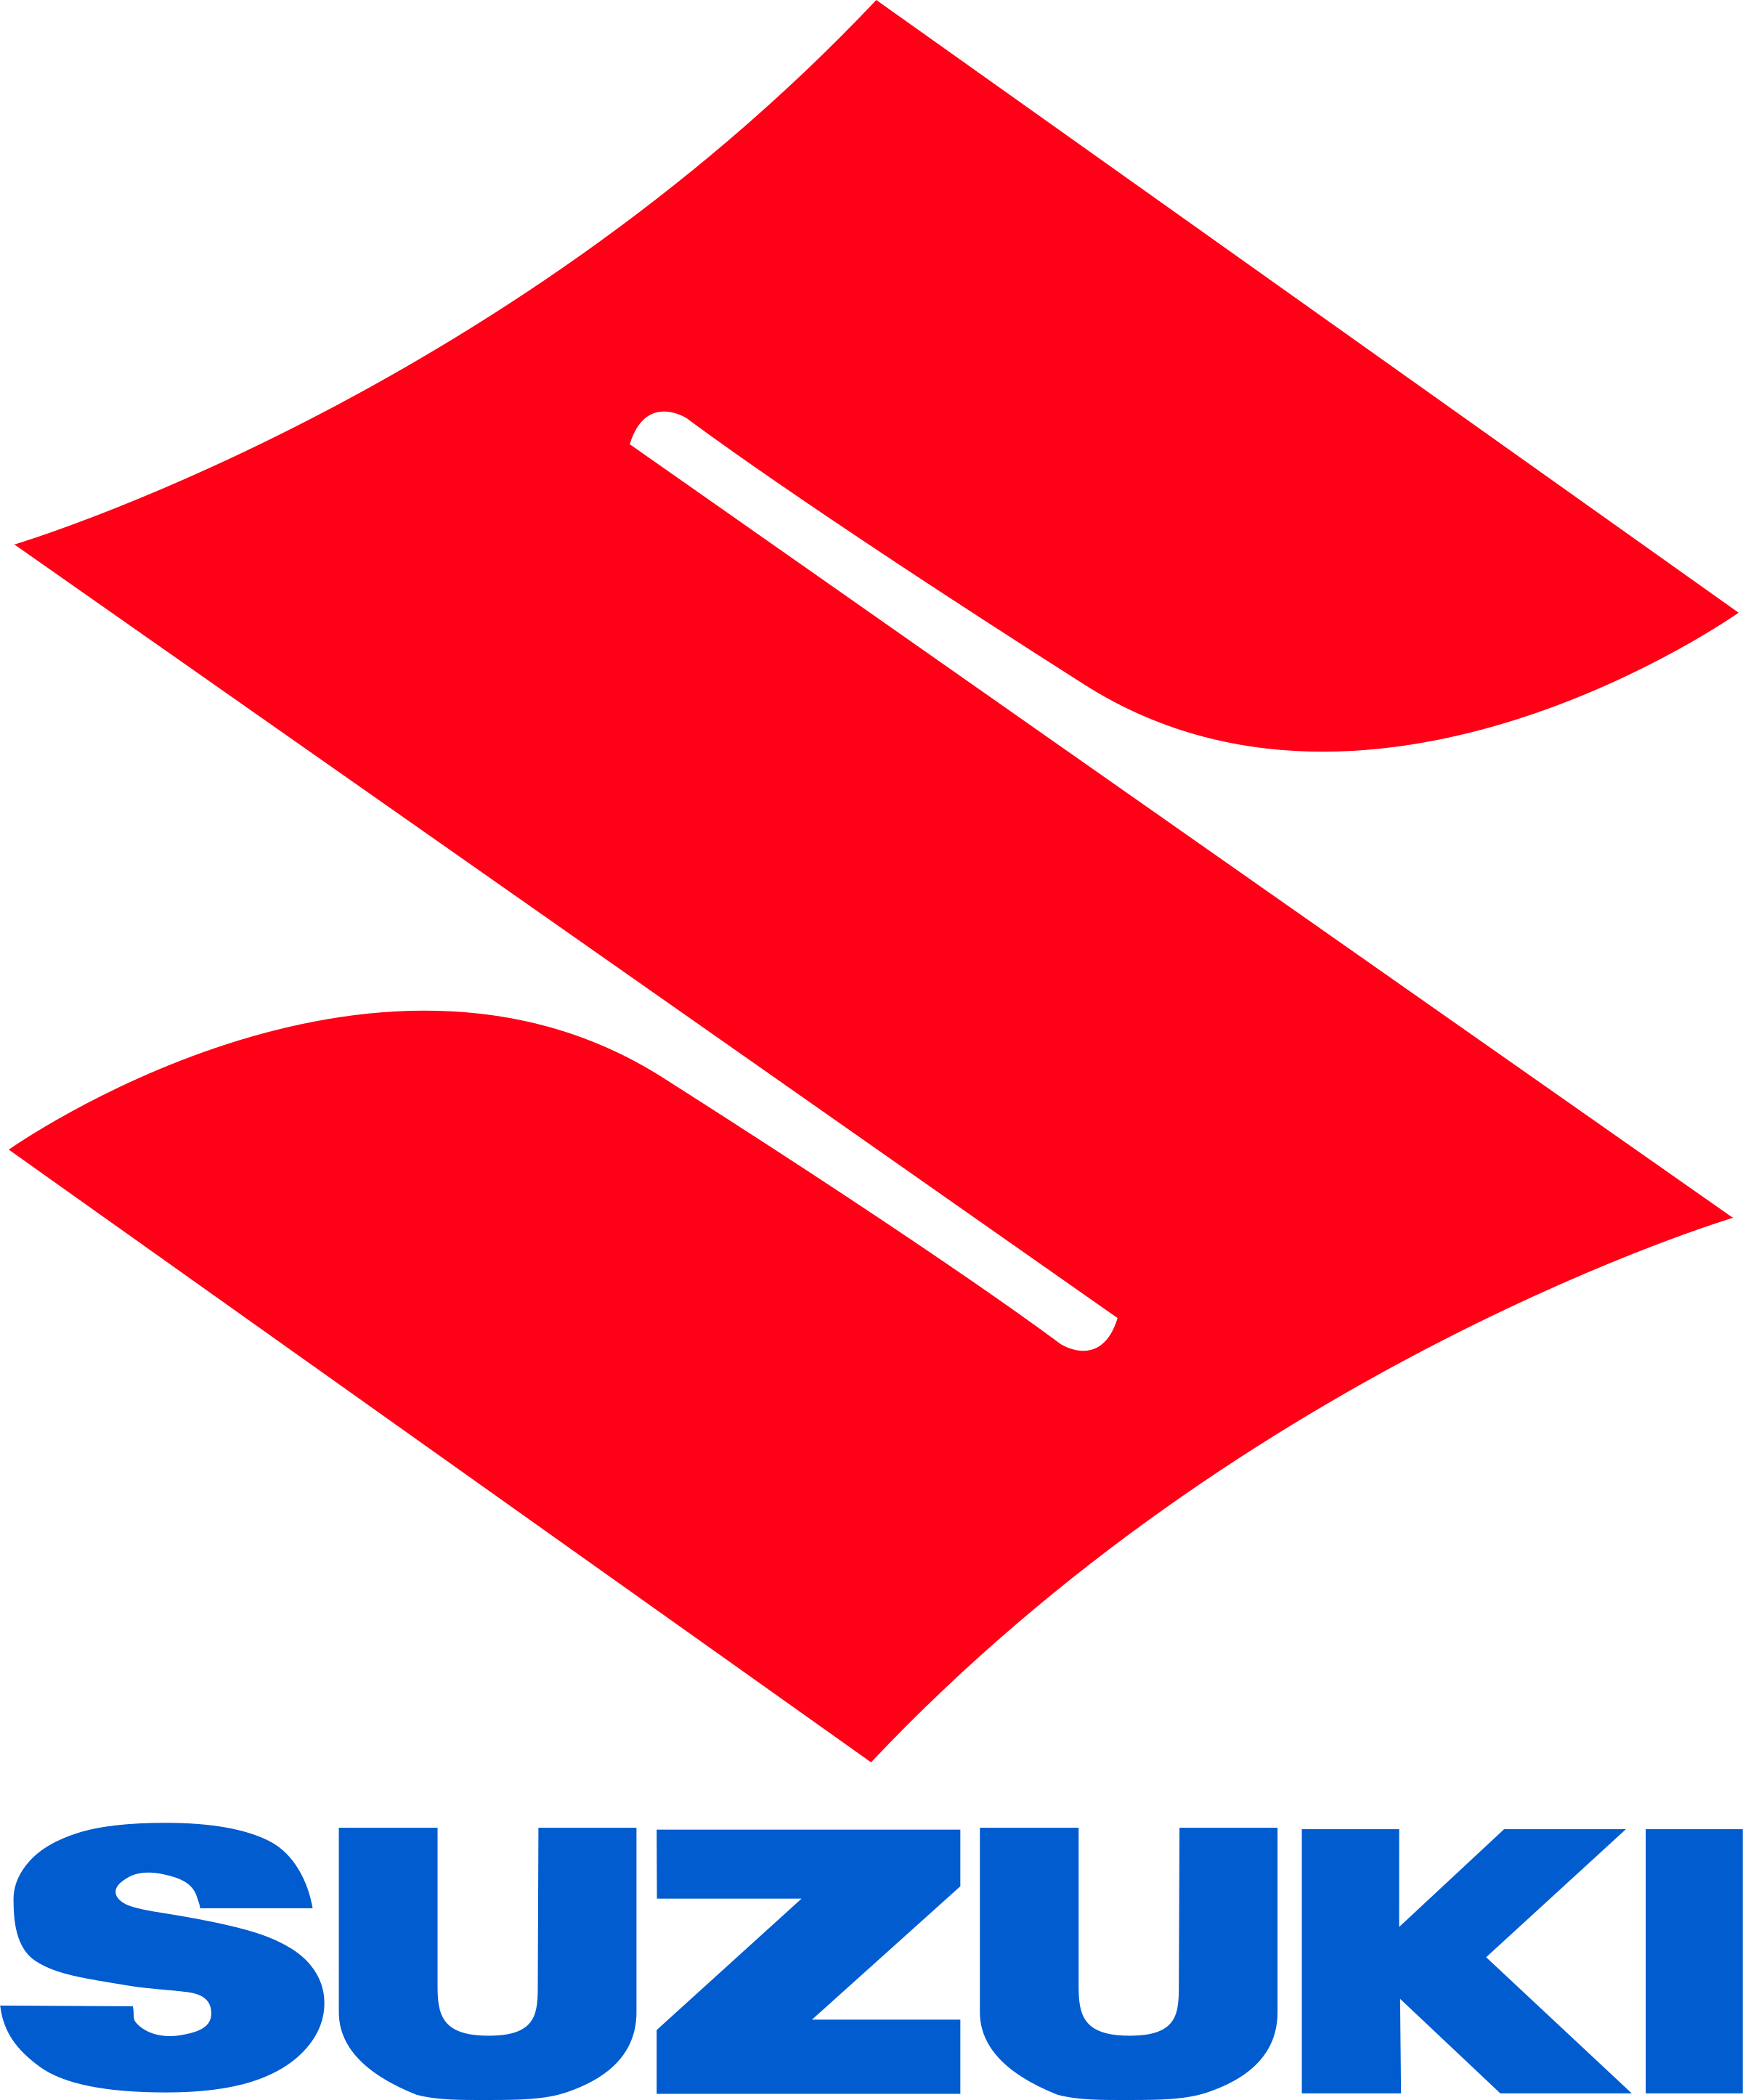 Suzuki PNG Transparent Image